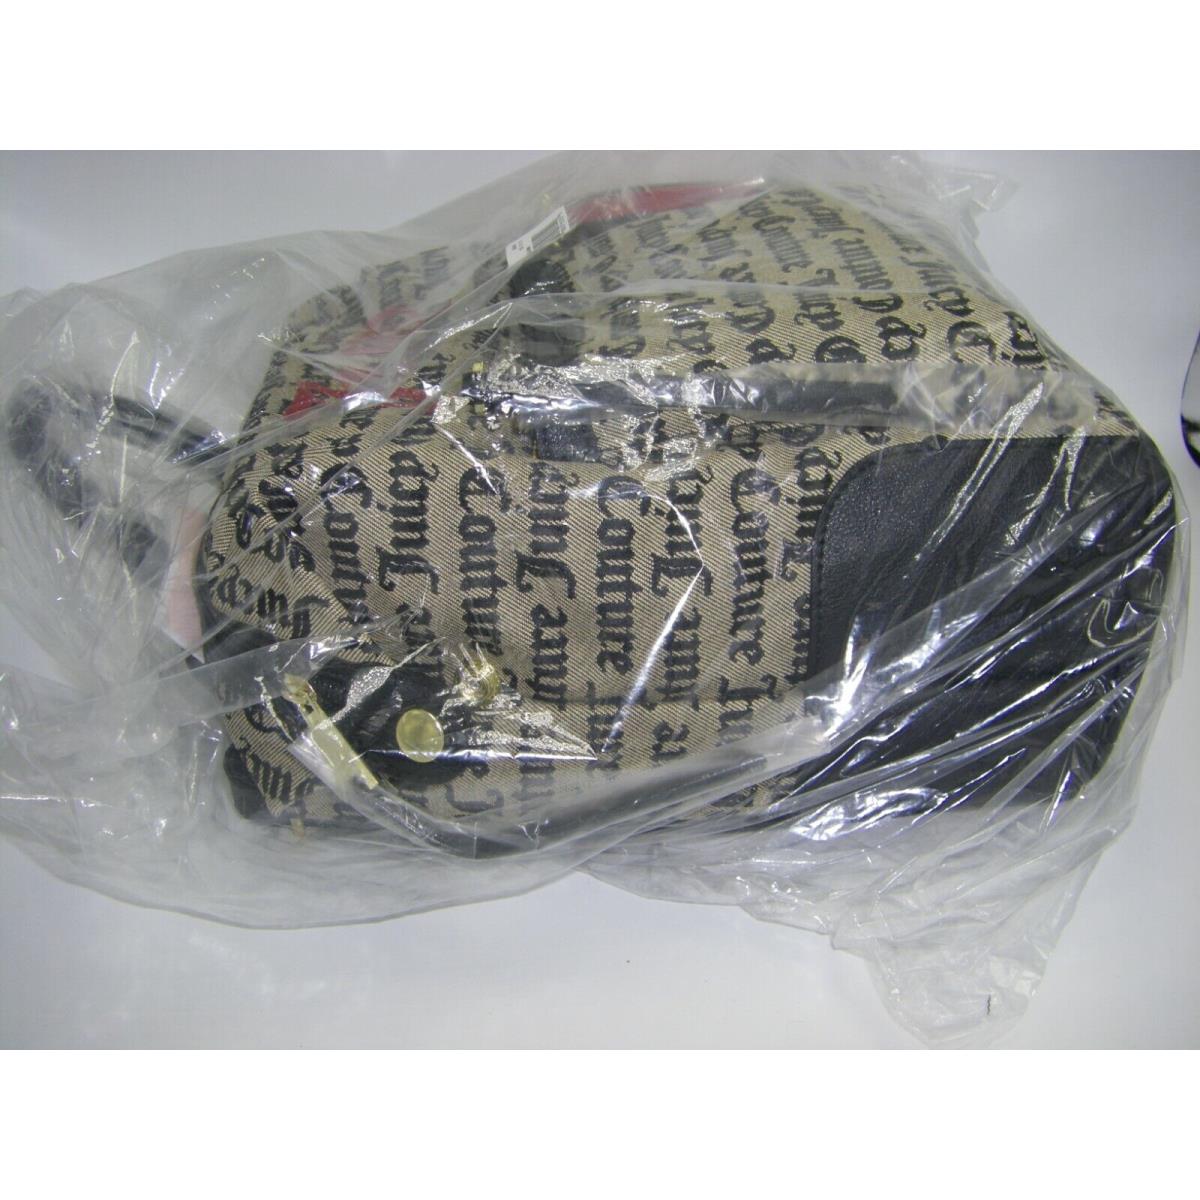 Juicy Couture  bag   - Black/Beige/Red Exterior, Multicolor Lining, Black Handle/Strap 4